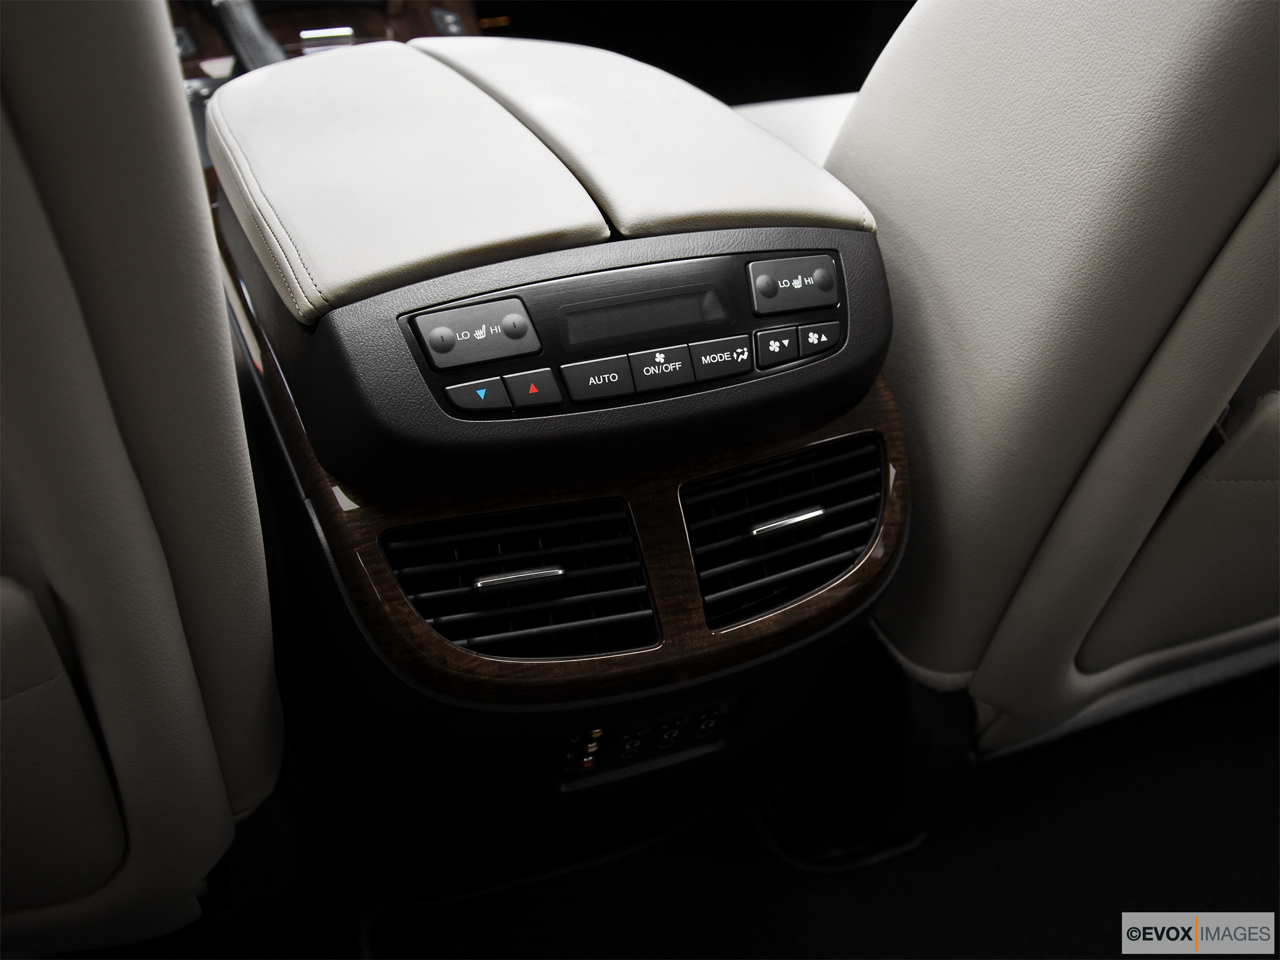 2010 Acura MDX MDX Rear A/C controls. 